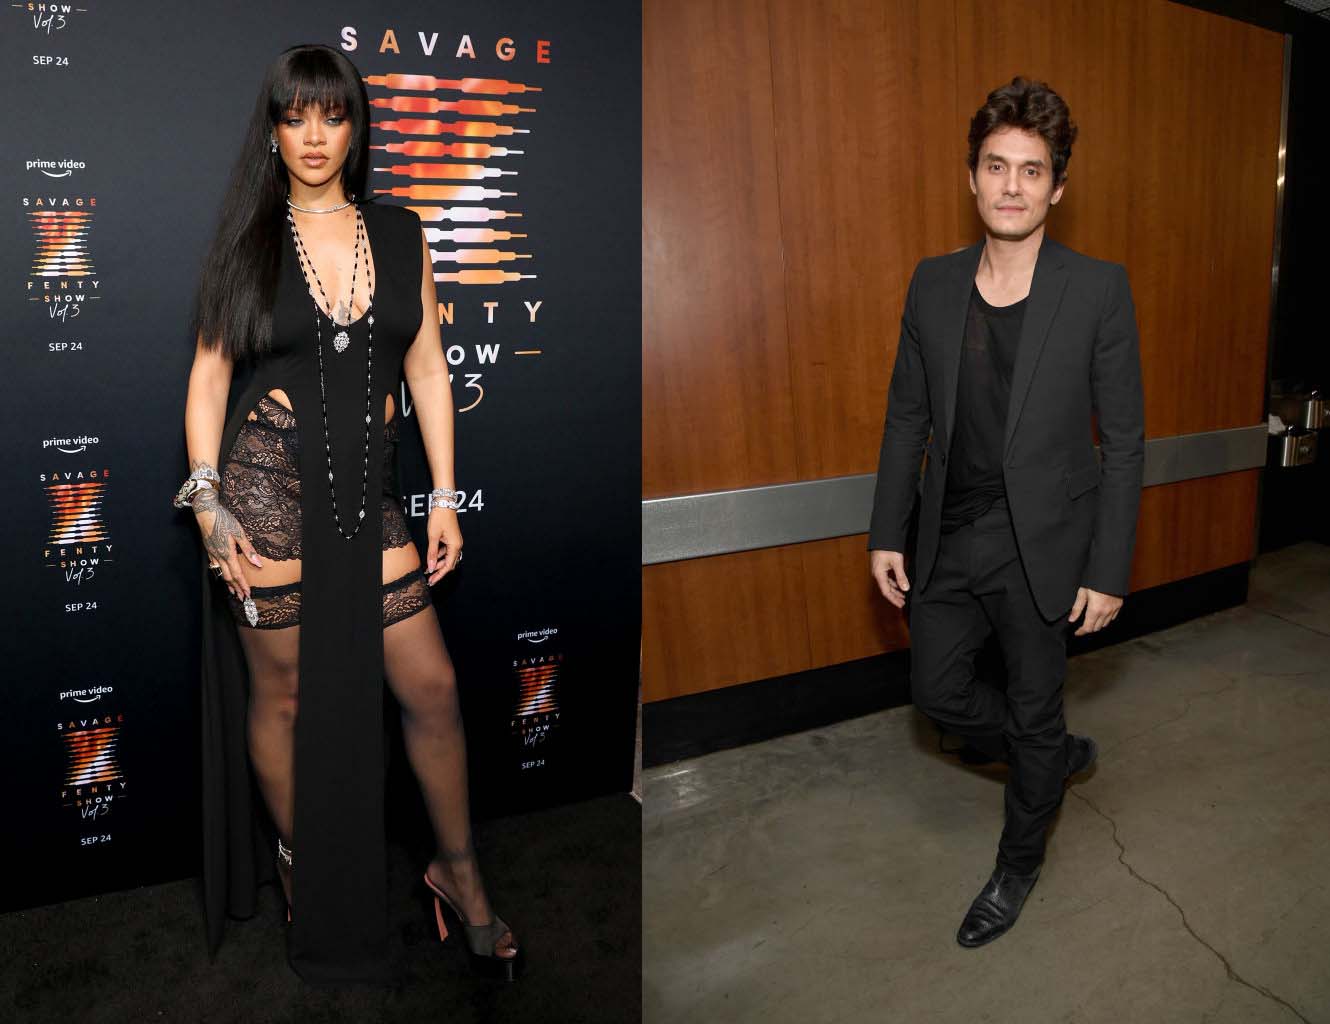 John Mayer, Rihanna Recent Meet Up Fuels New Collaboration Rumors - Here's How Fans Reacted